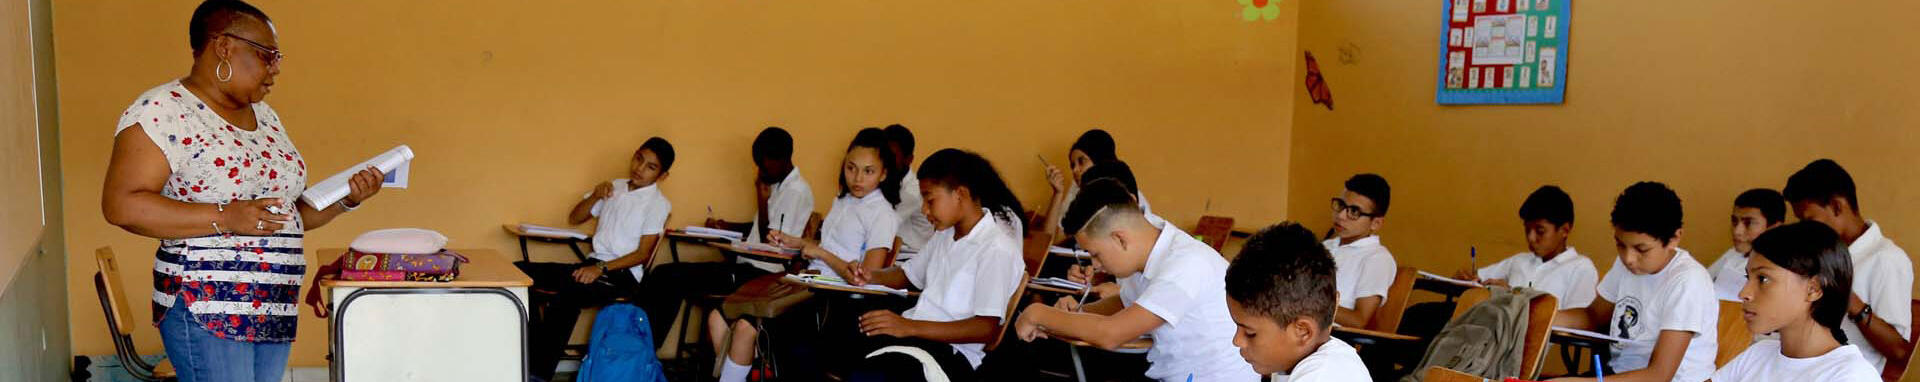 World Bank Latin America and the Caribbean School in La Ceiba and Corozal, Honduras Photo: Jessica Belmont